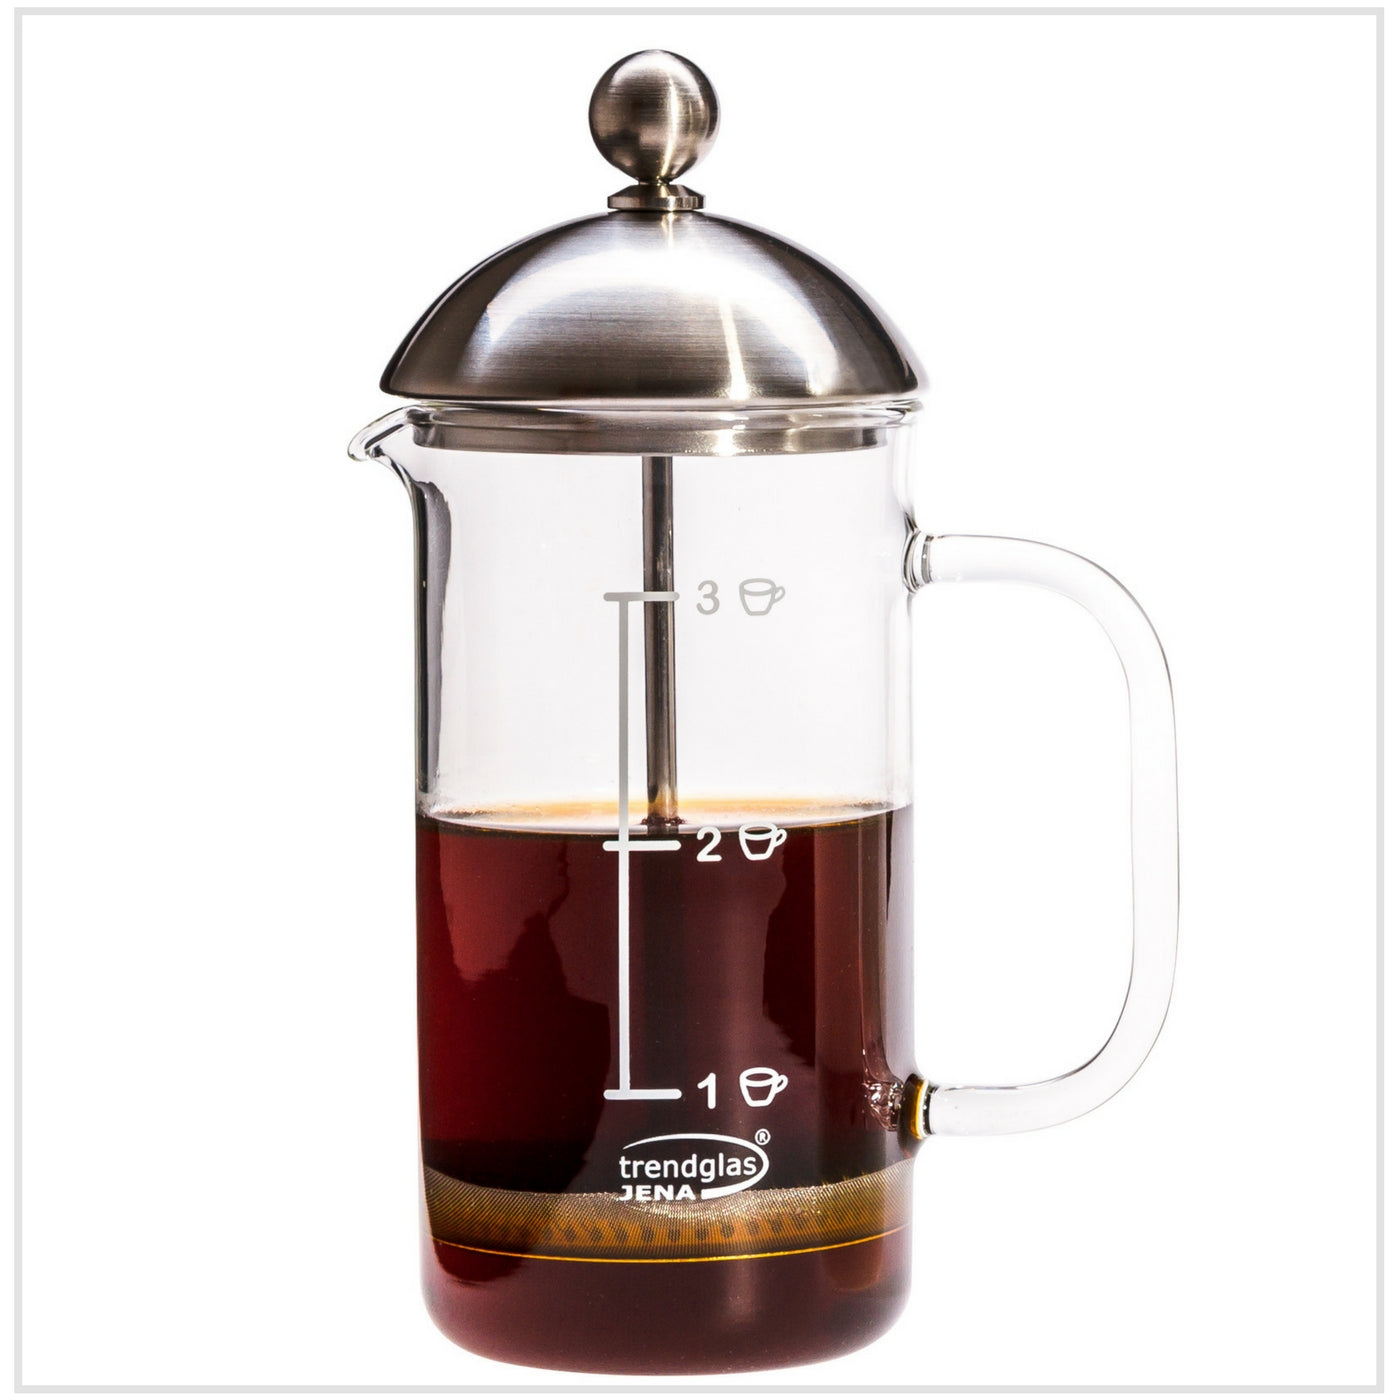 Trendglas Coffee Maker 3 Cup